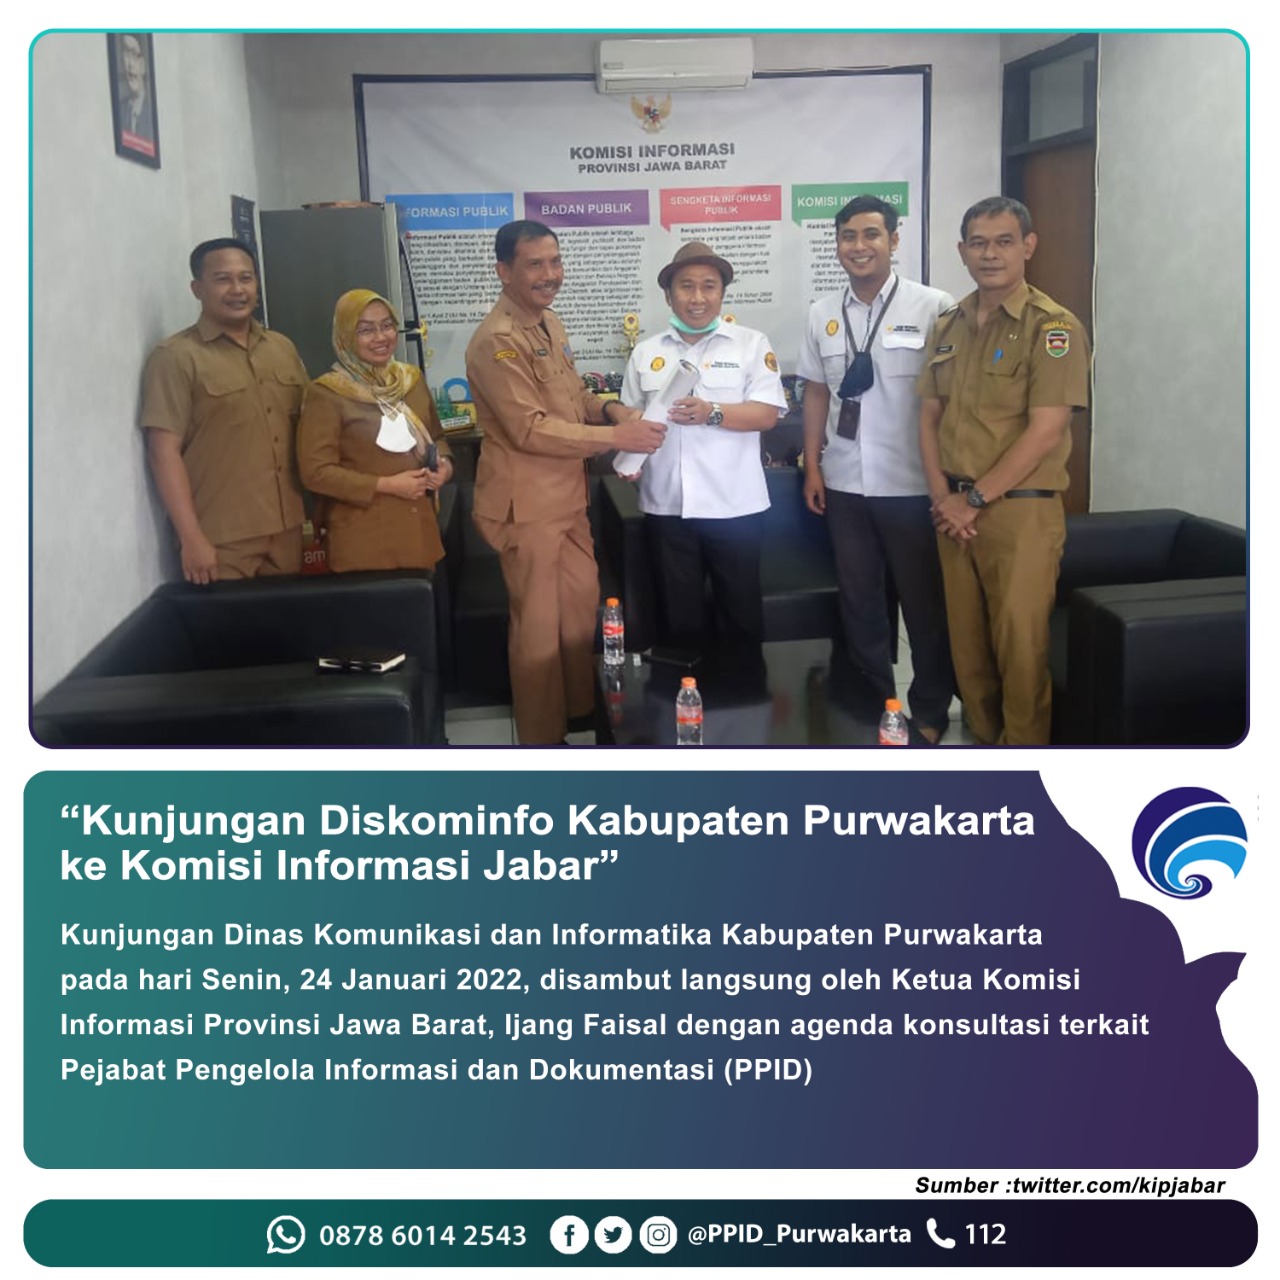 Kunjungan Diskominfo Kabupaten Purwakarta ke Komisi Informasi Jabar